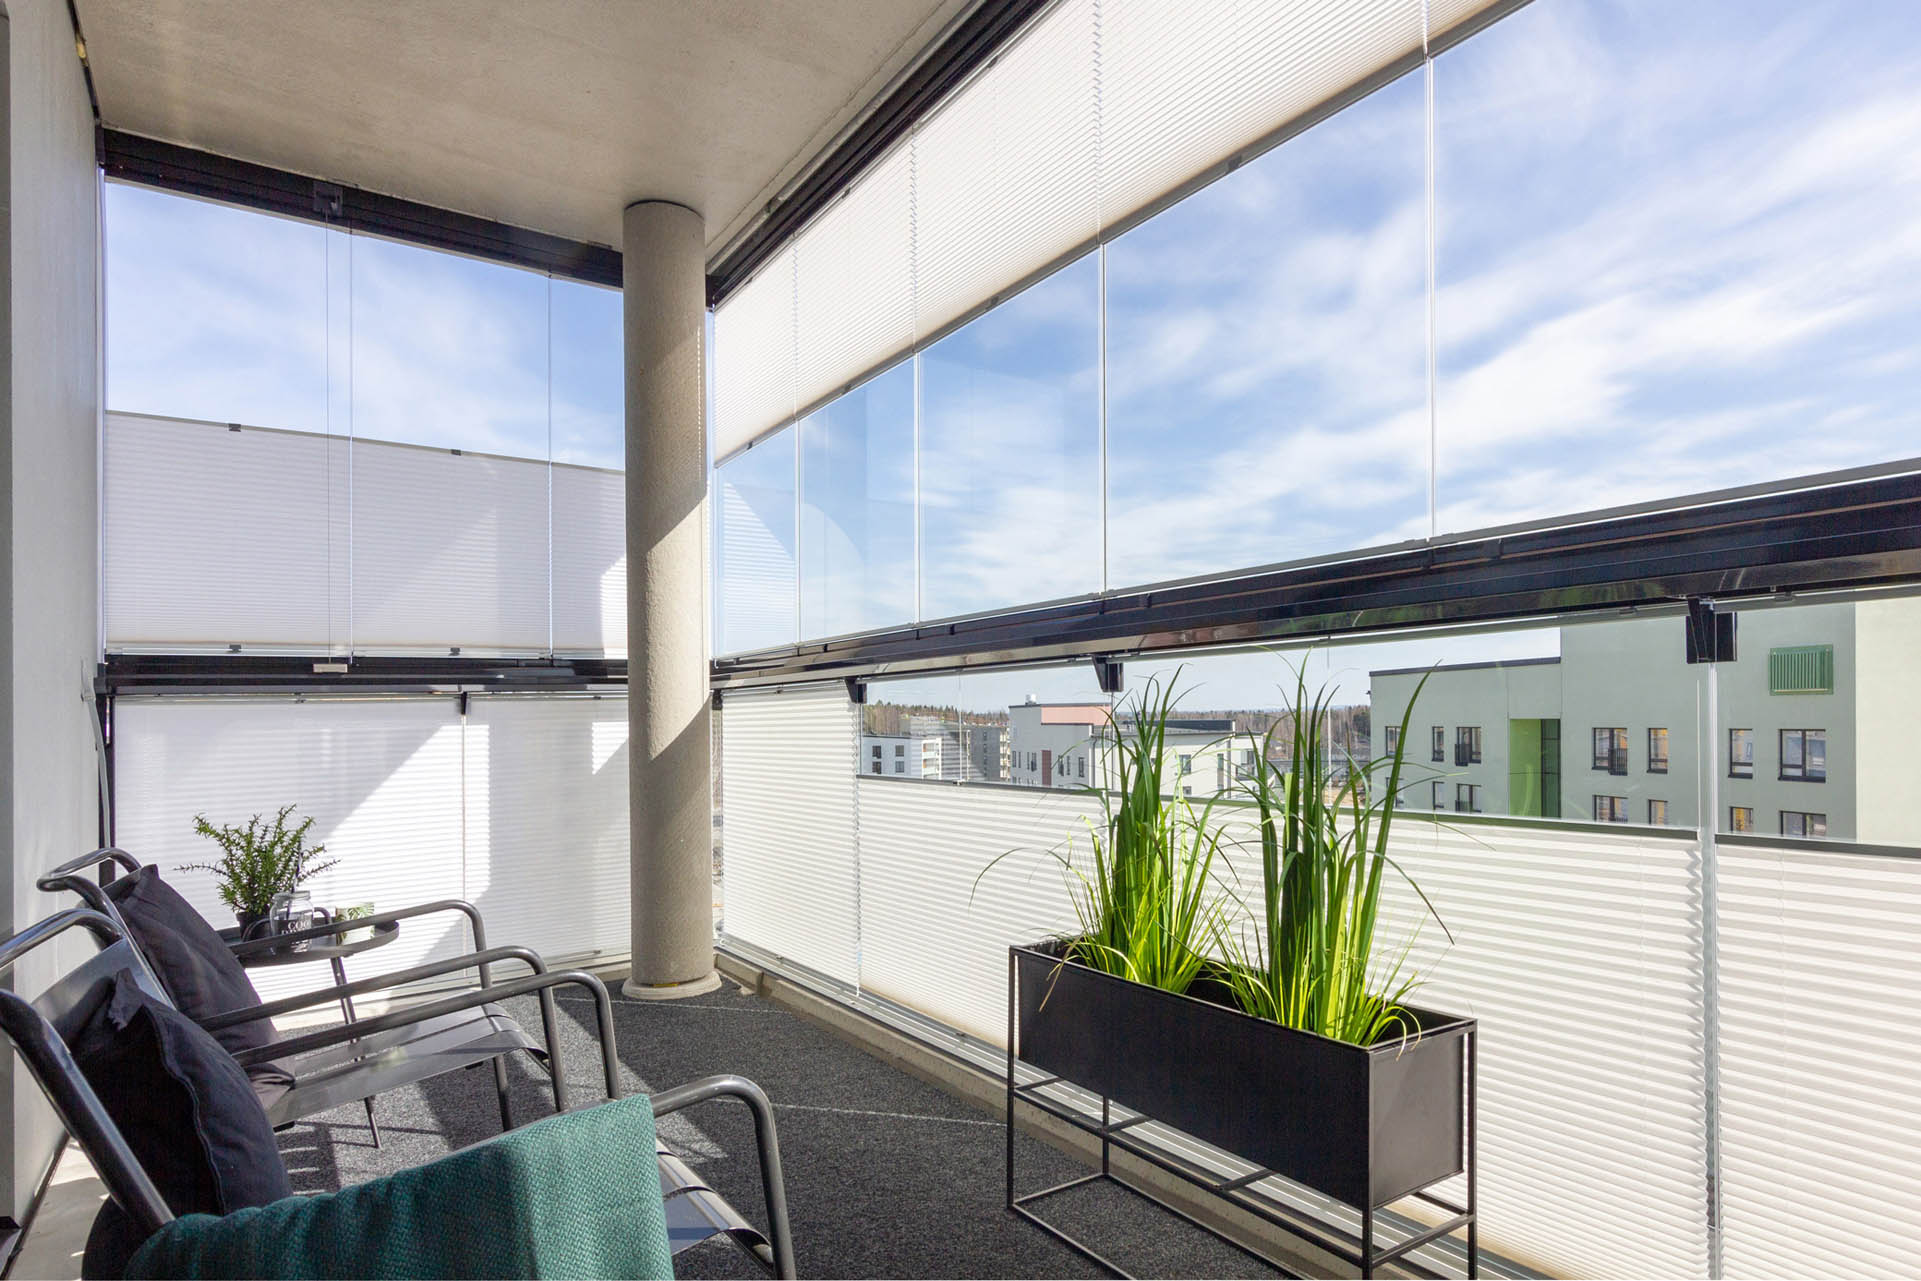 Balcony Glazing Planning